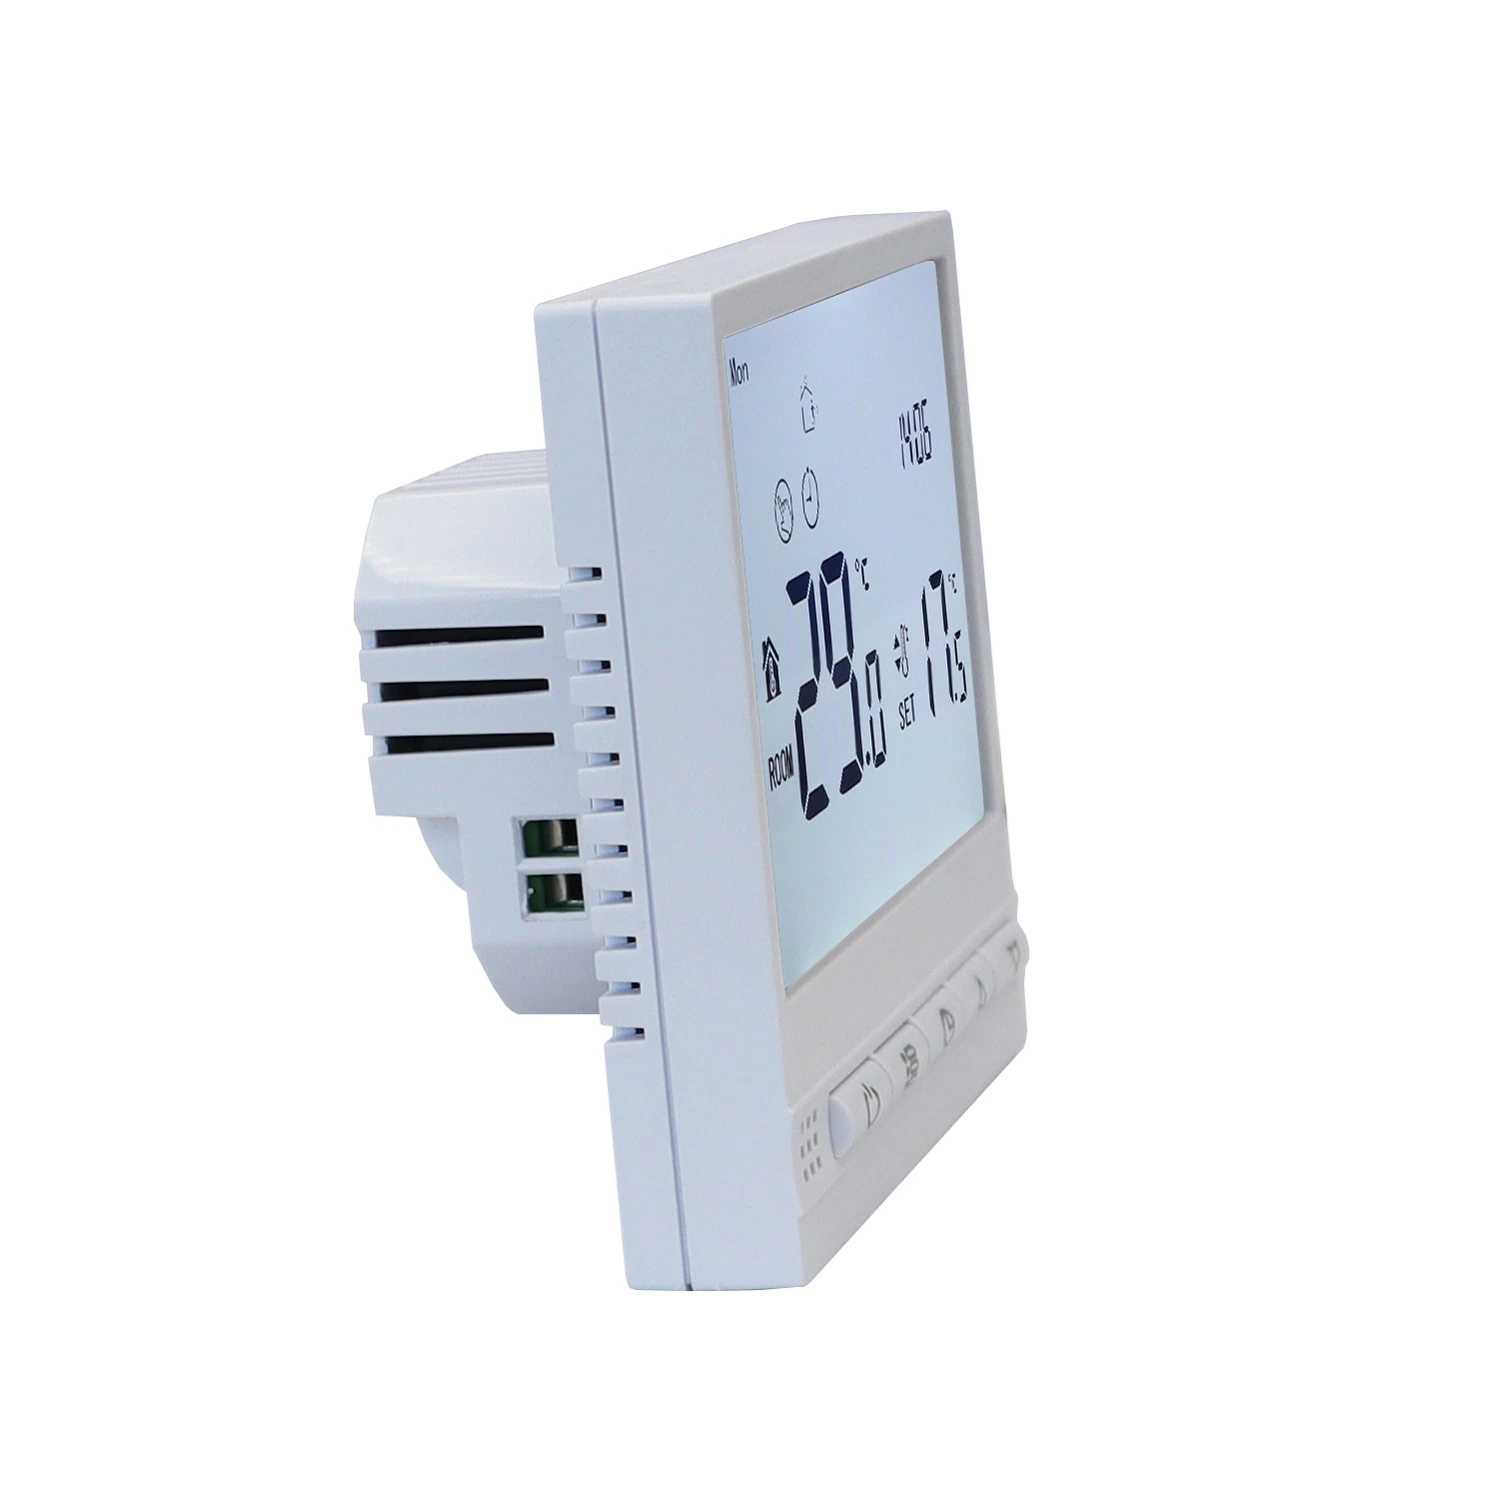 Botón estilo pantalla LCD grande termostato de calefacción de suelo programable con MANDO a distancia DE LA APLICACIÓN Smart WiFi